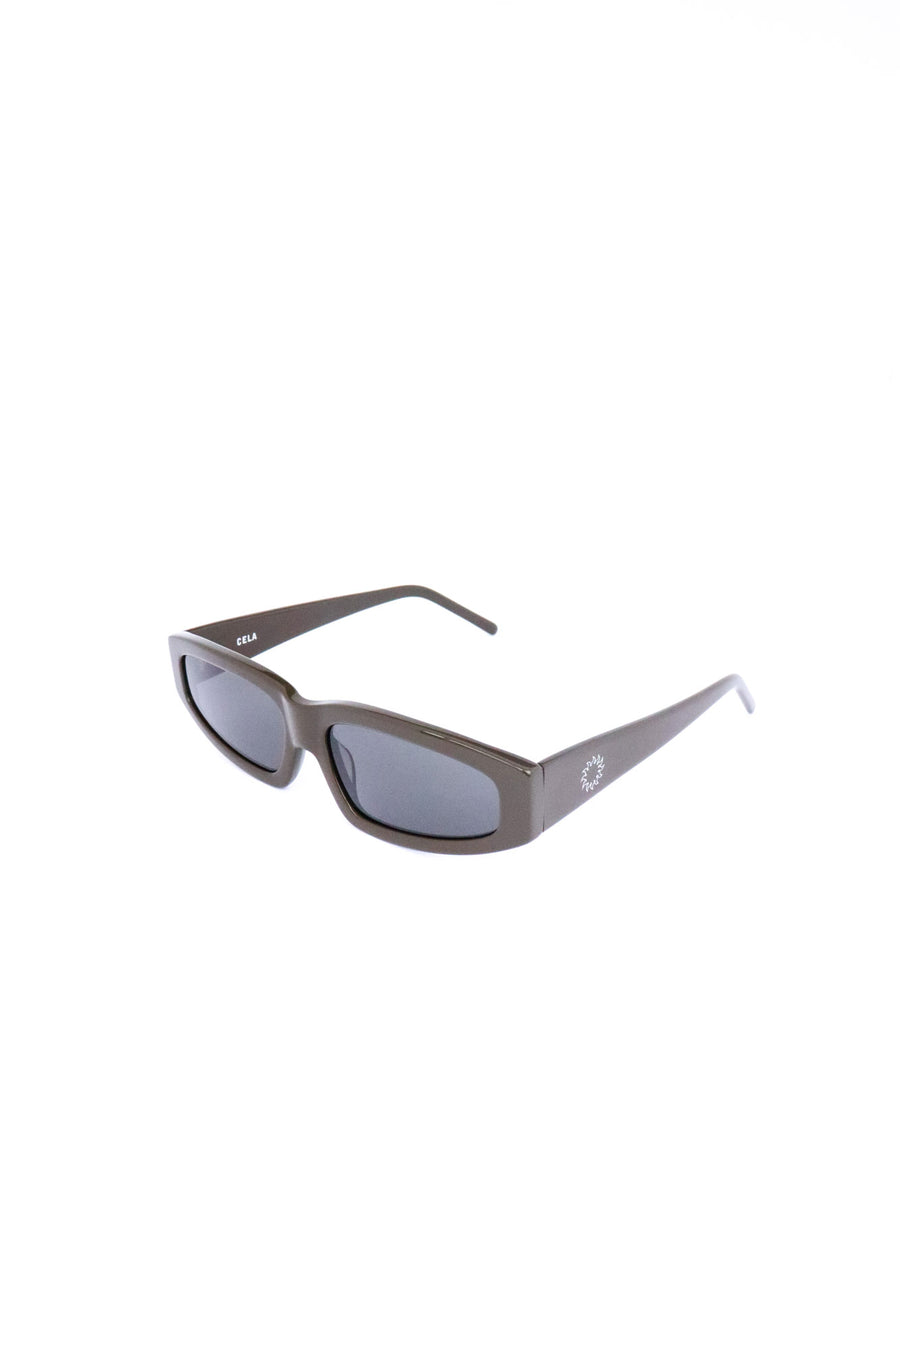 Avoir Eyewear - Cela in Olive - Sunglasses